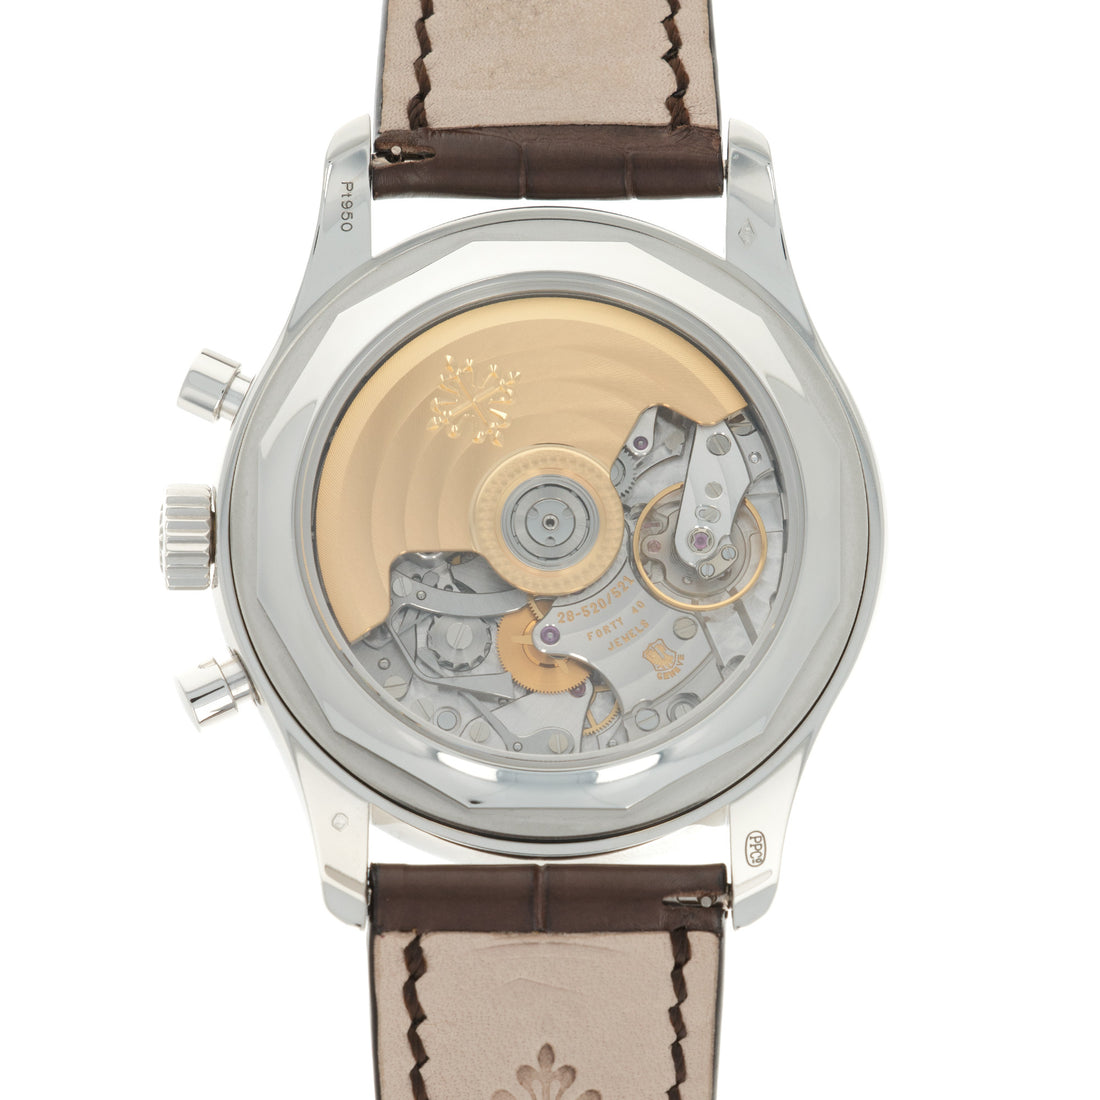 Patek Philippe Platinum Annual Calendar Chronograph Watch, Ref. 5960